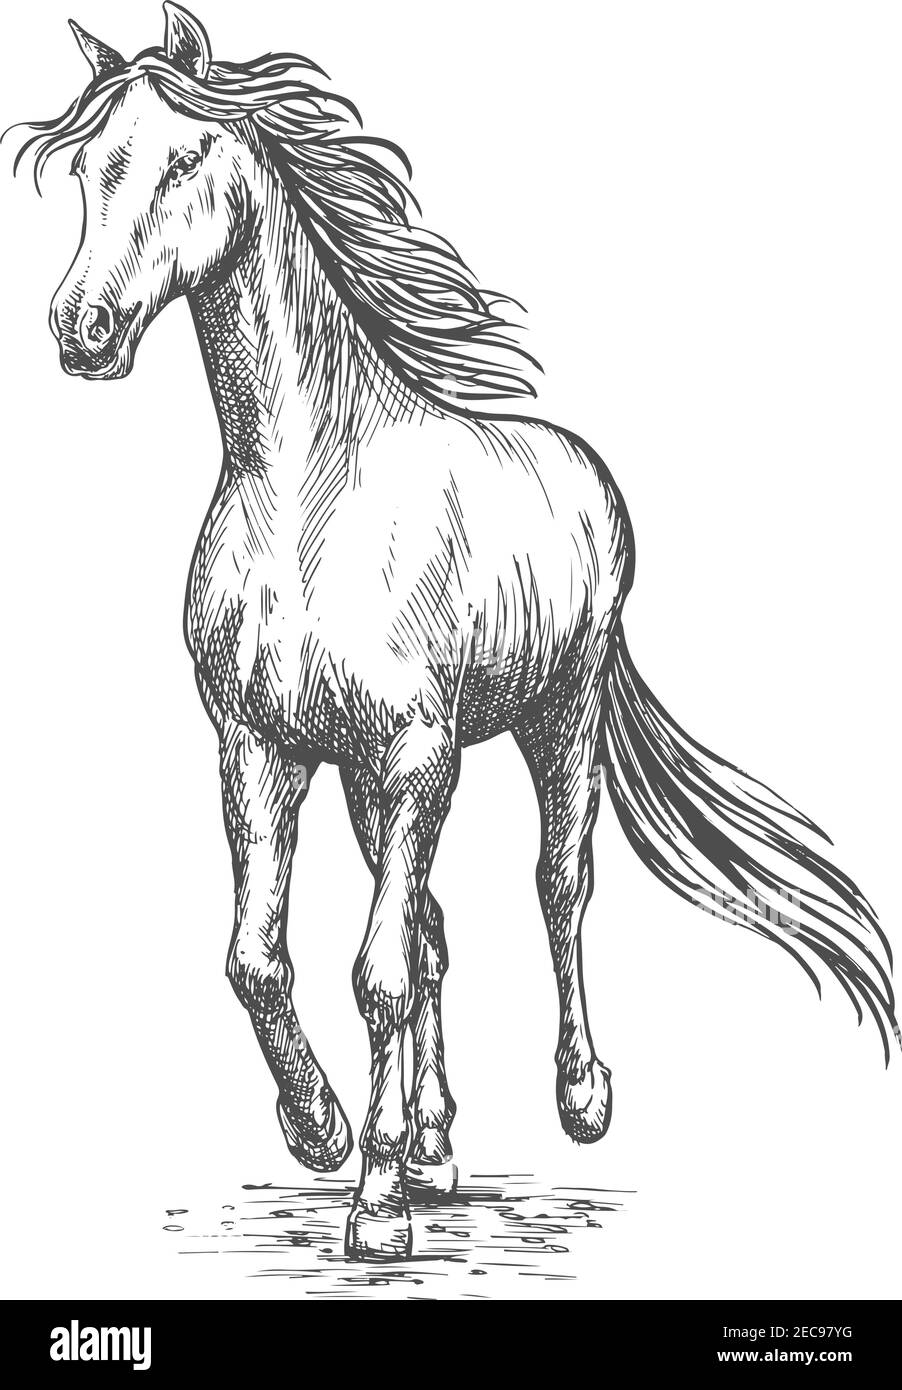 Galloping Horse 1 - Andrea S4-A07 | kingshobby.com